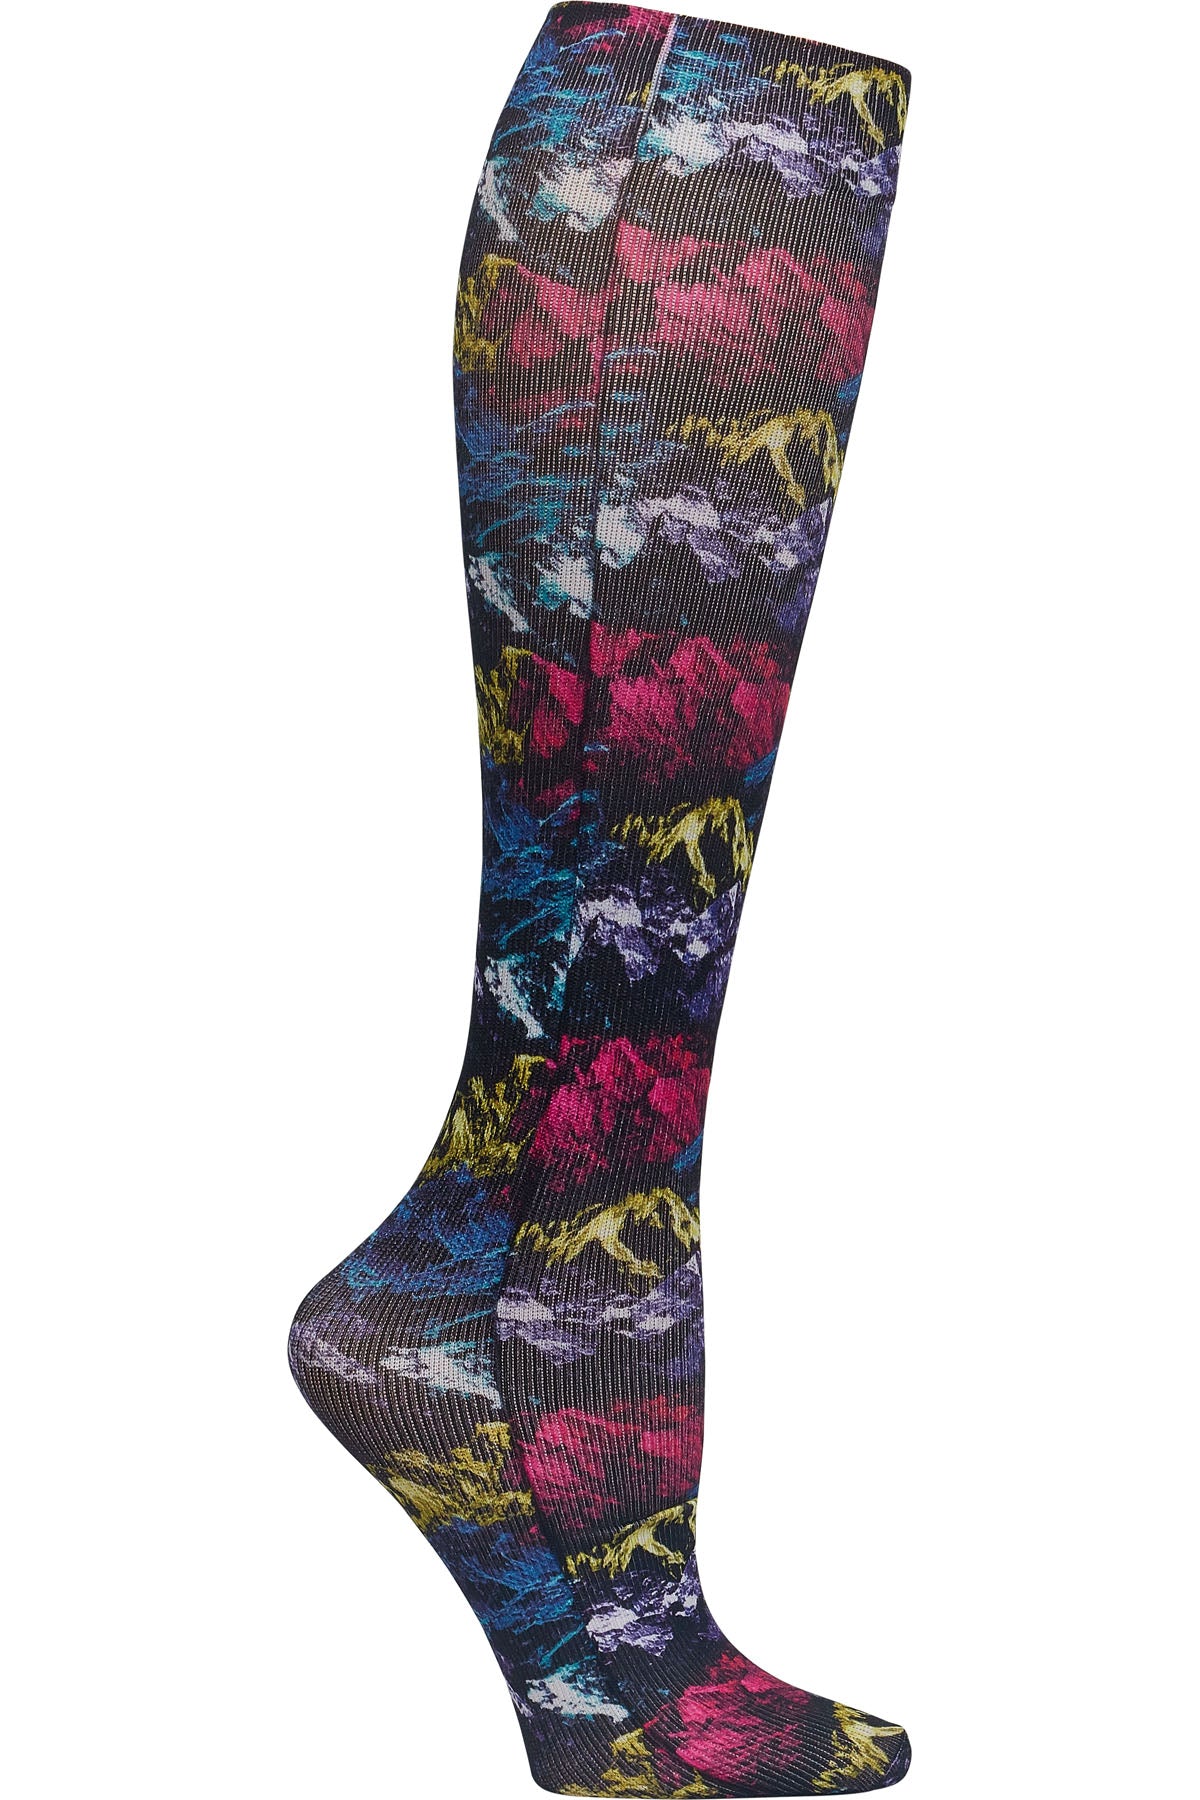 Celeste Stein Mild Compression Socks 8-15 mmHg | eBay